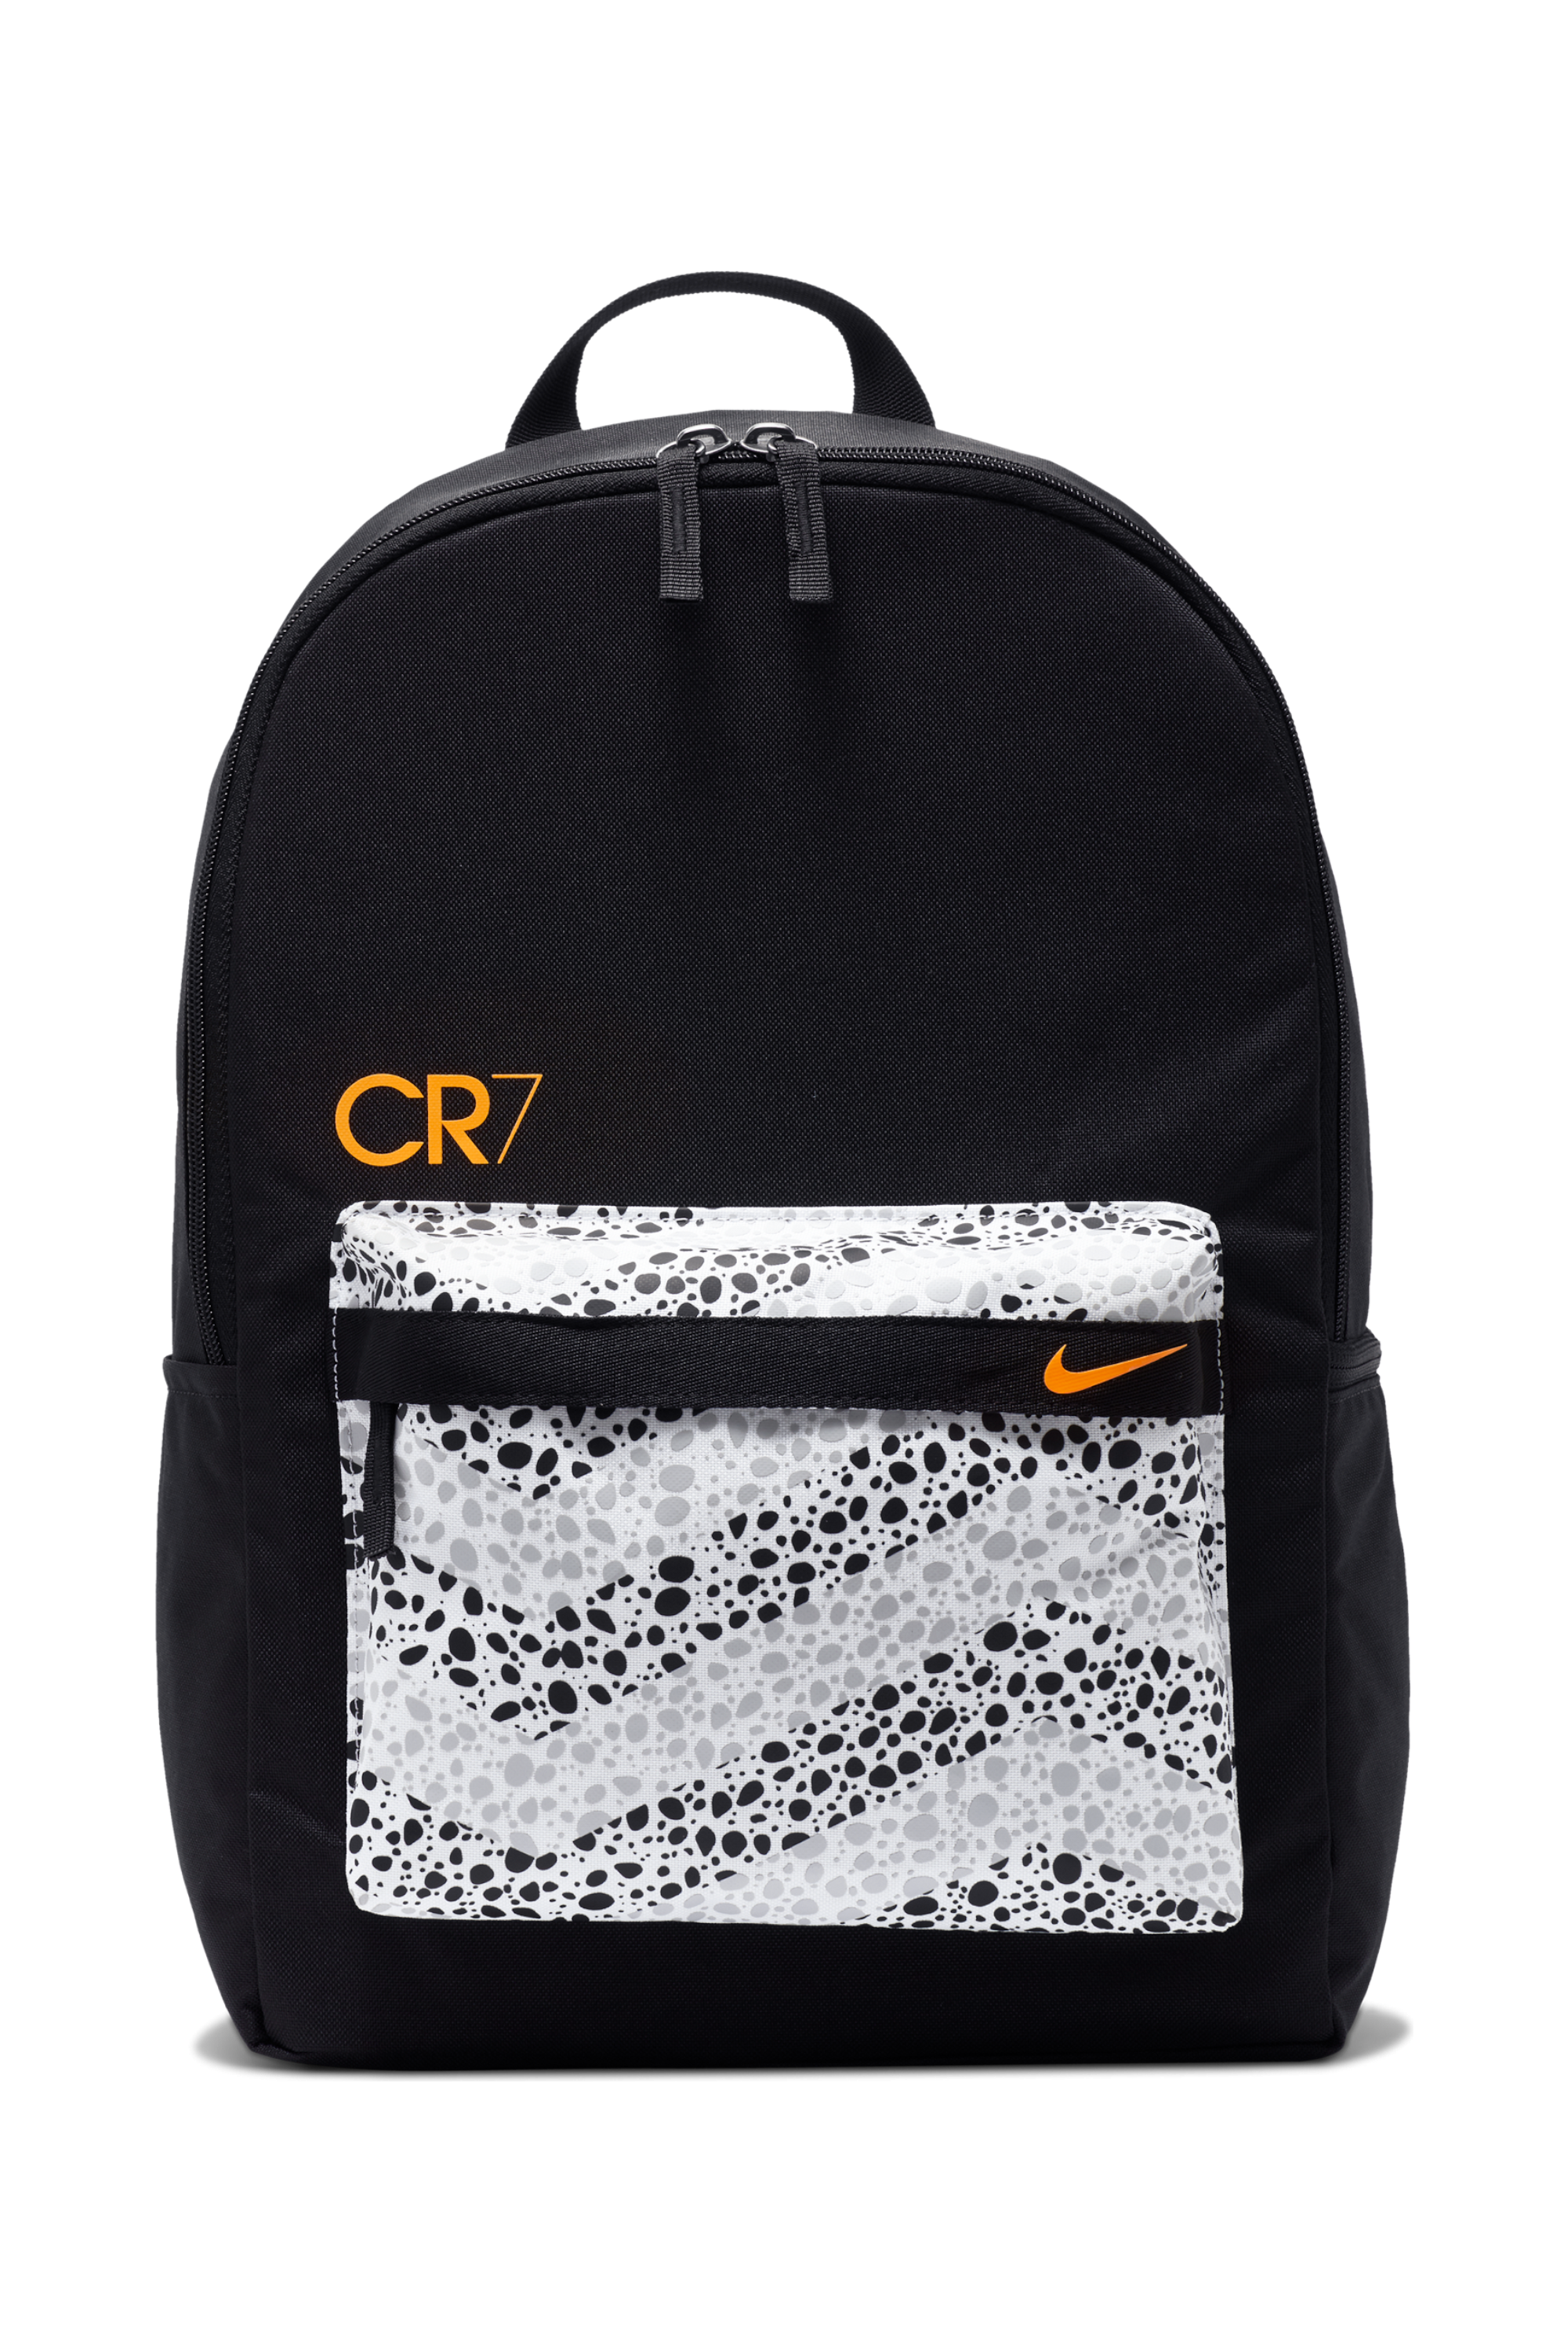 Backpack Nike CR7 | R-GOL.com 